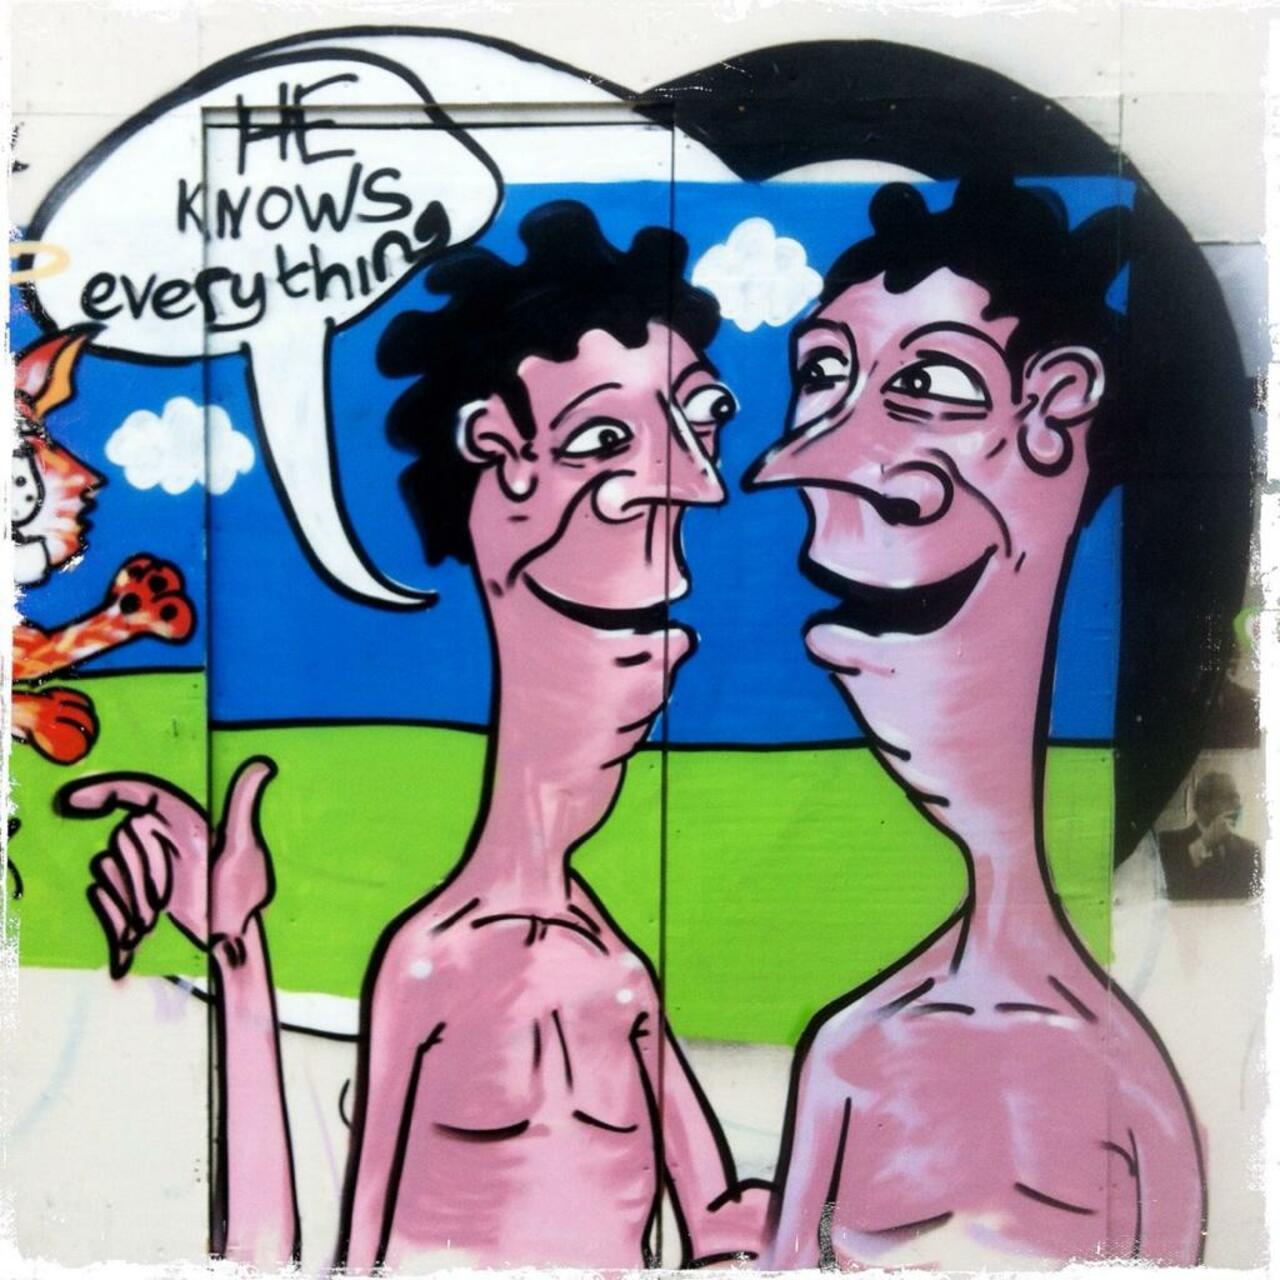 "He knows everything"

Streetart on hoardings in Hanbury Street #art #graffiti http://t.co/2HQO5CNzoV